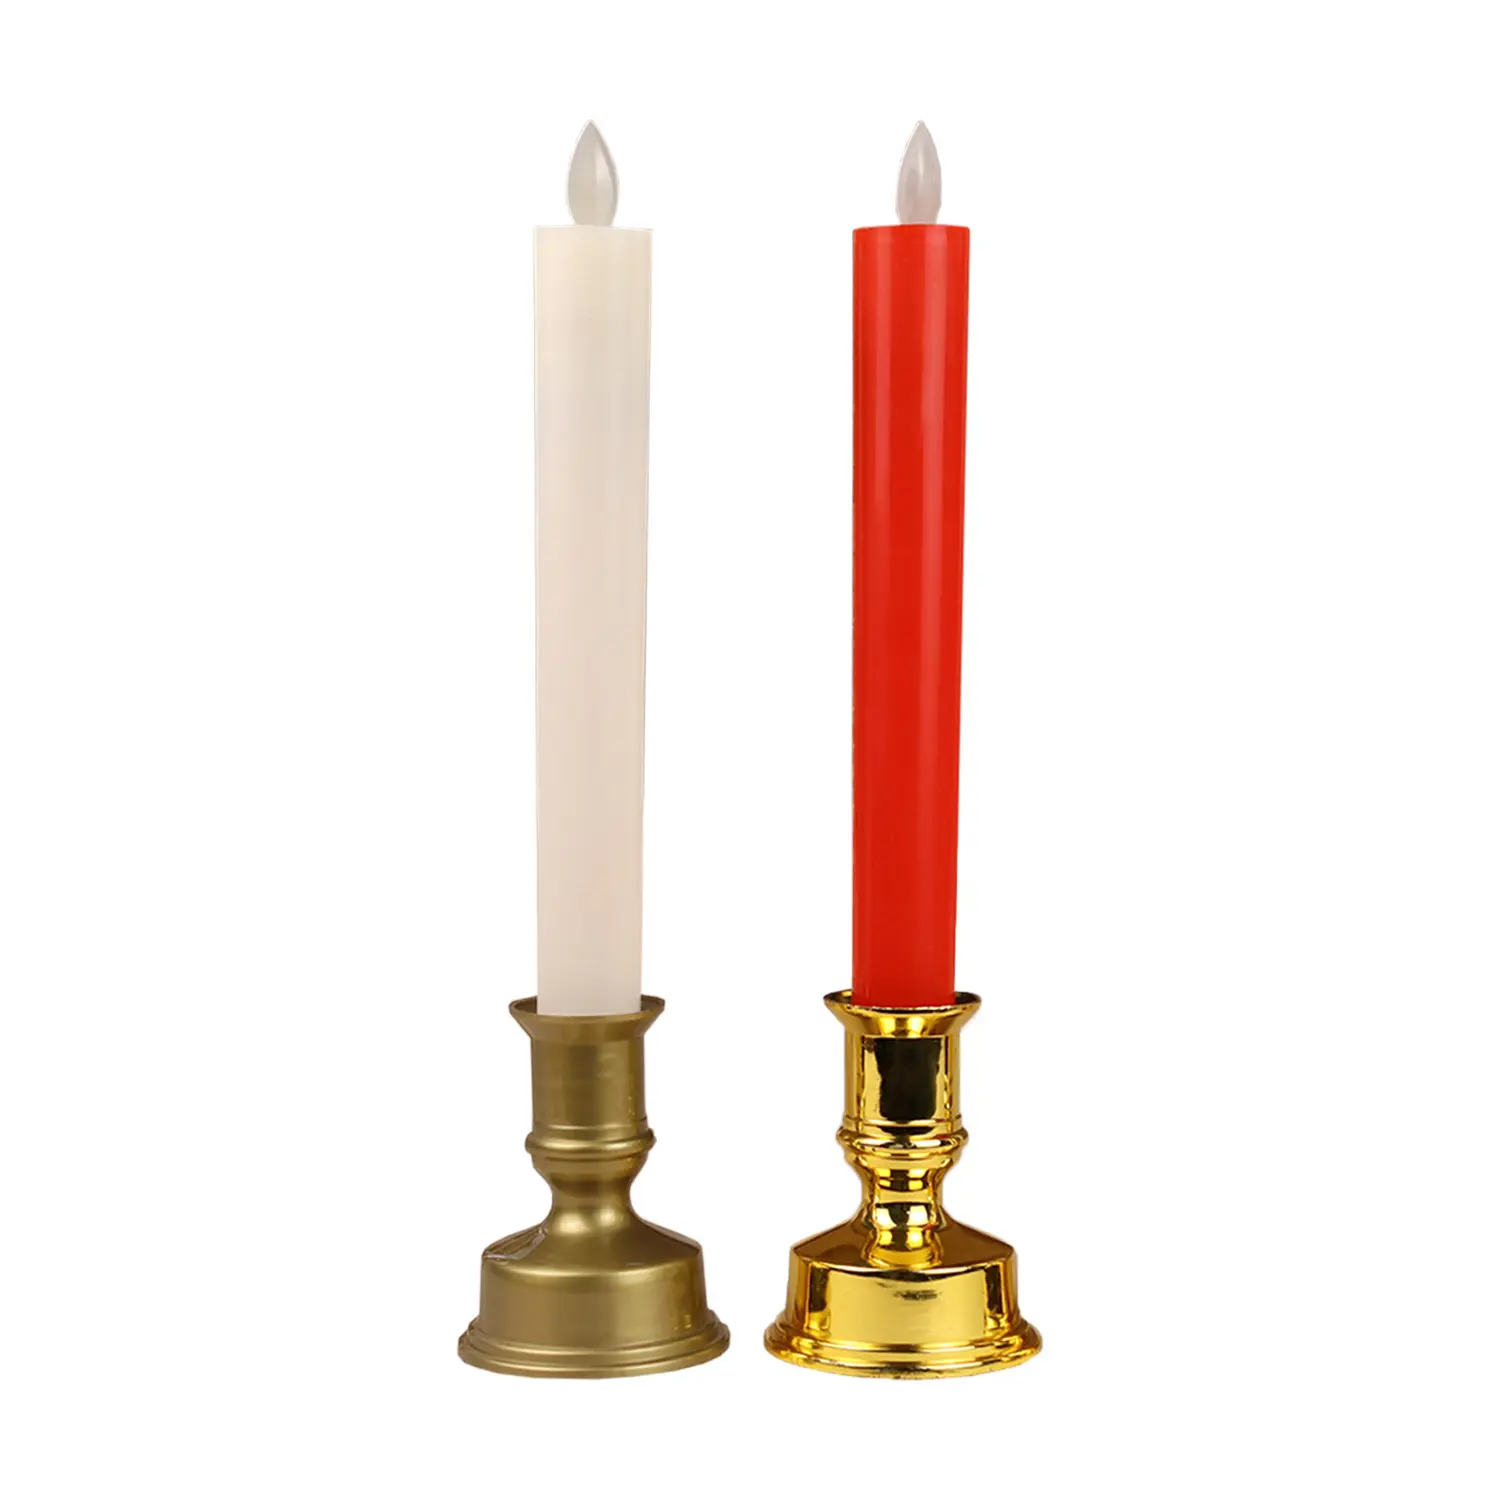 Kanlong candela conica senza fiamma a led bianca alimentata a batteria per interni con portacandele